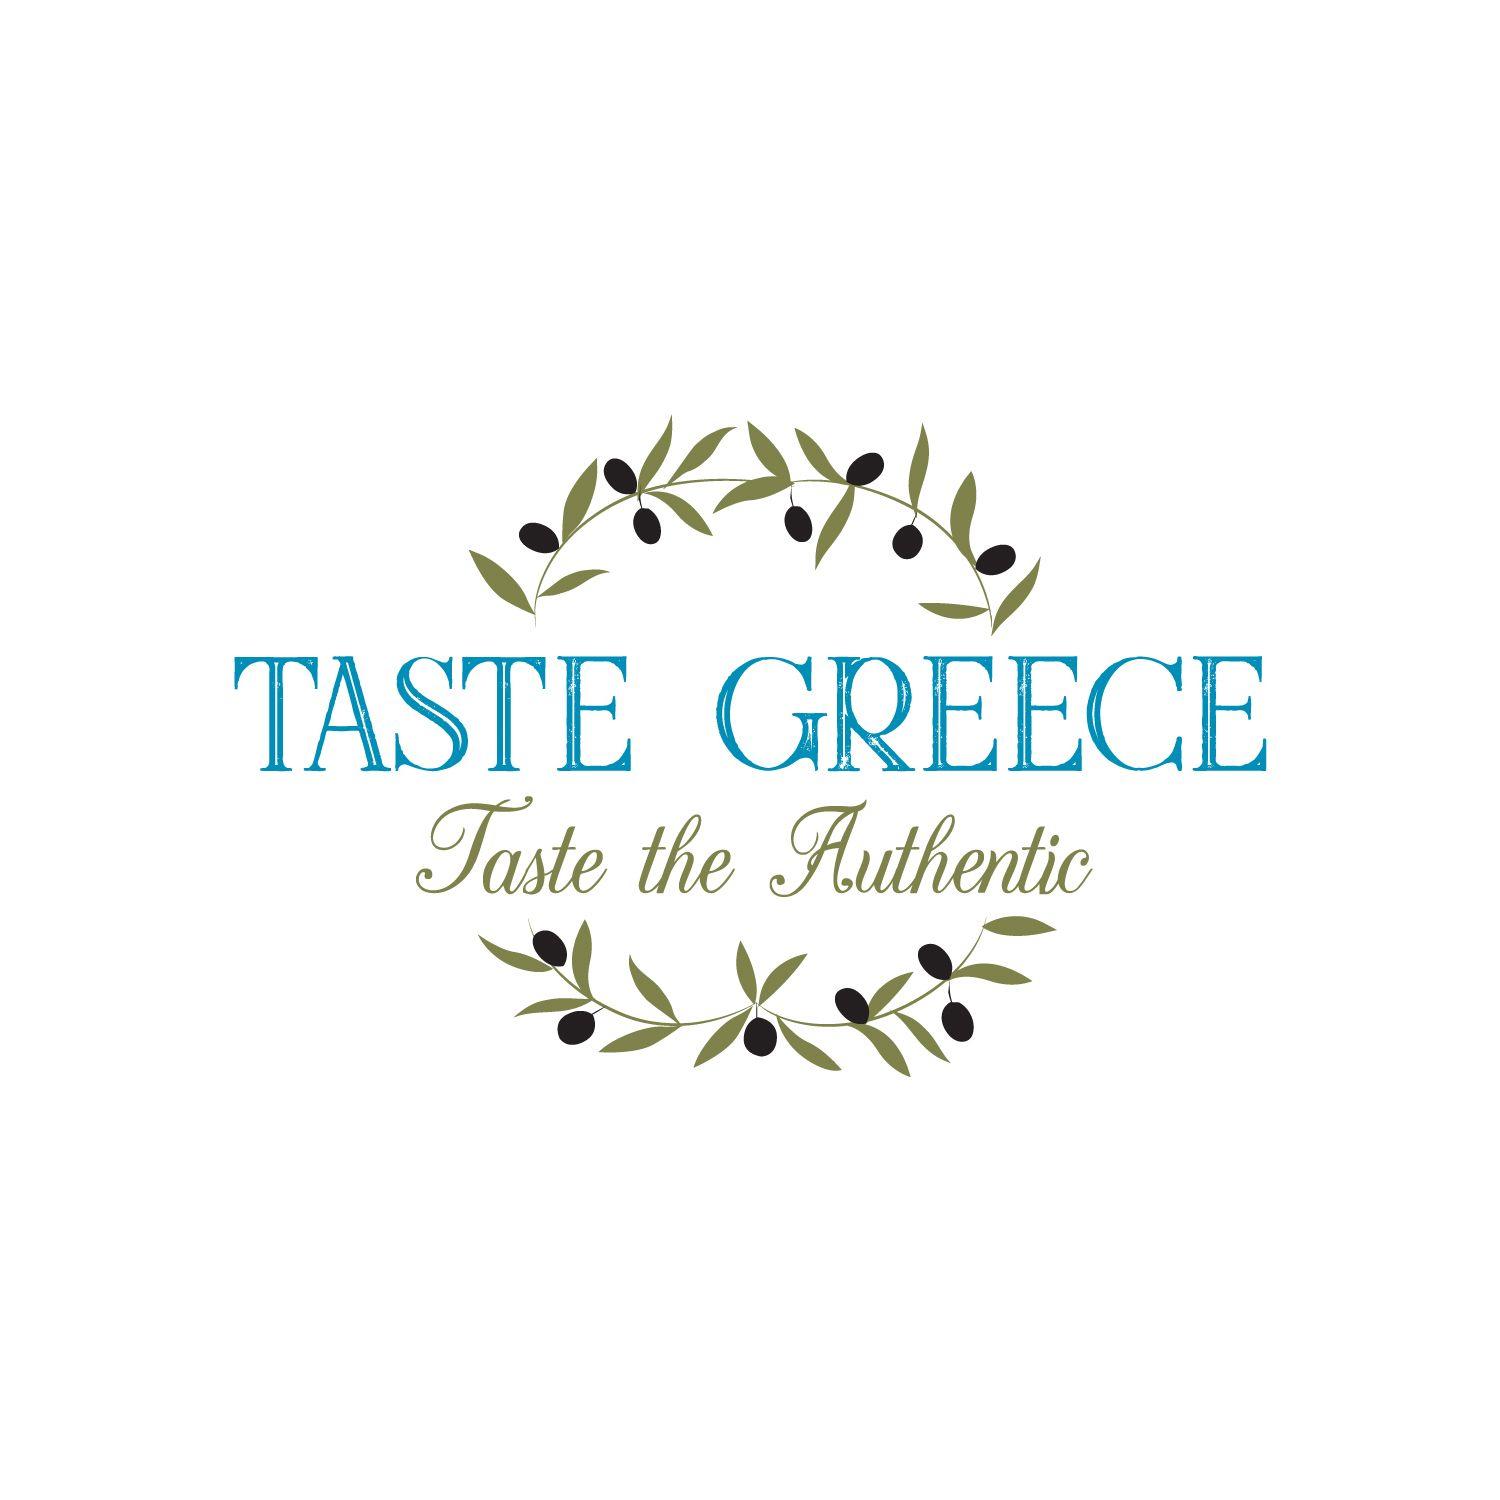 Greece Logo - Modern, Professional Logo Design for Taste Greece